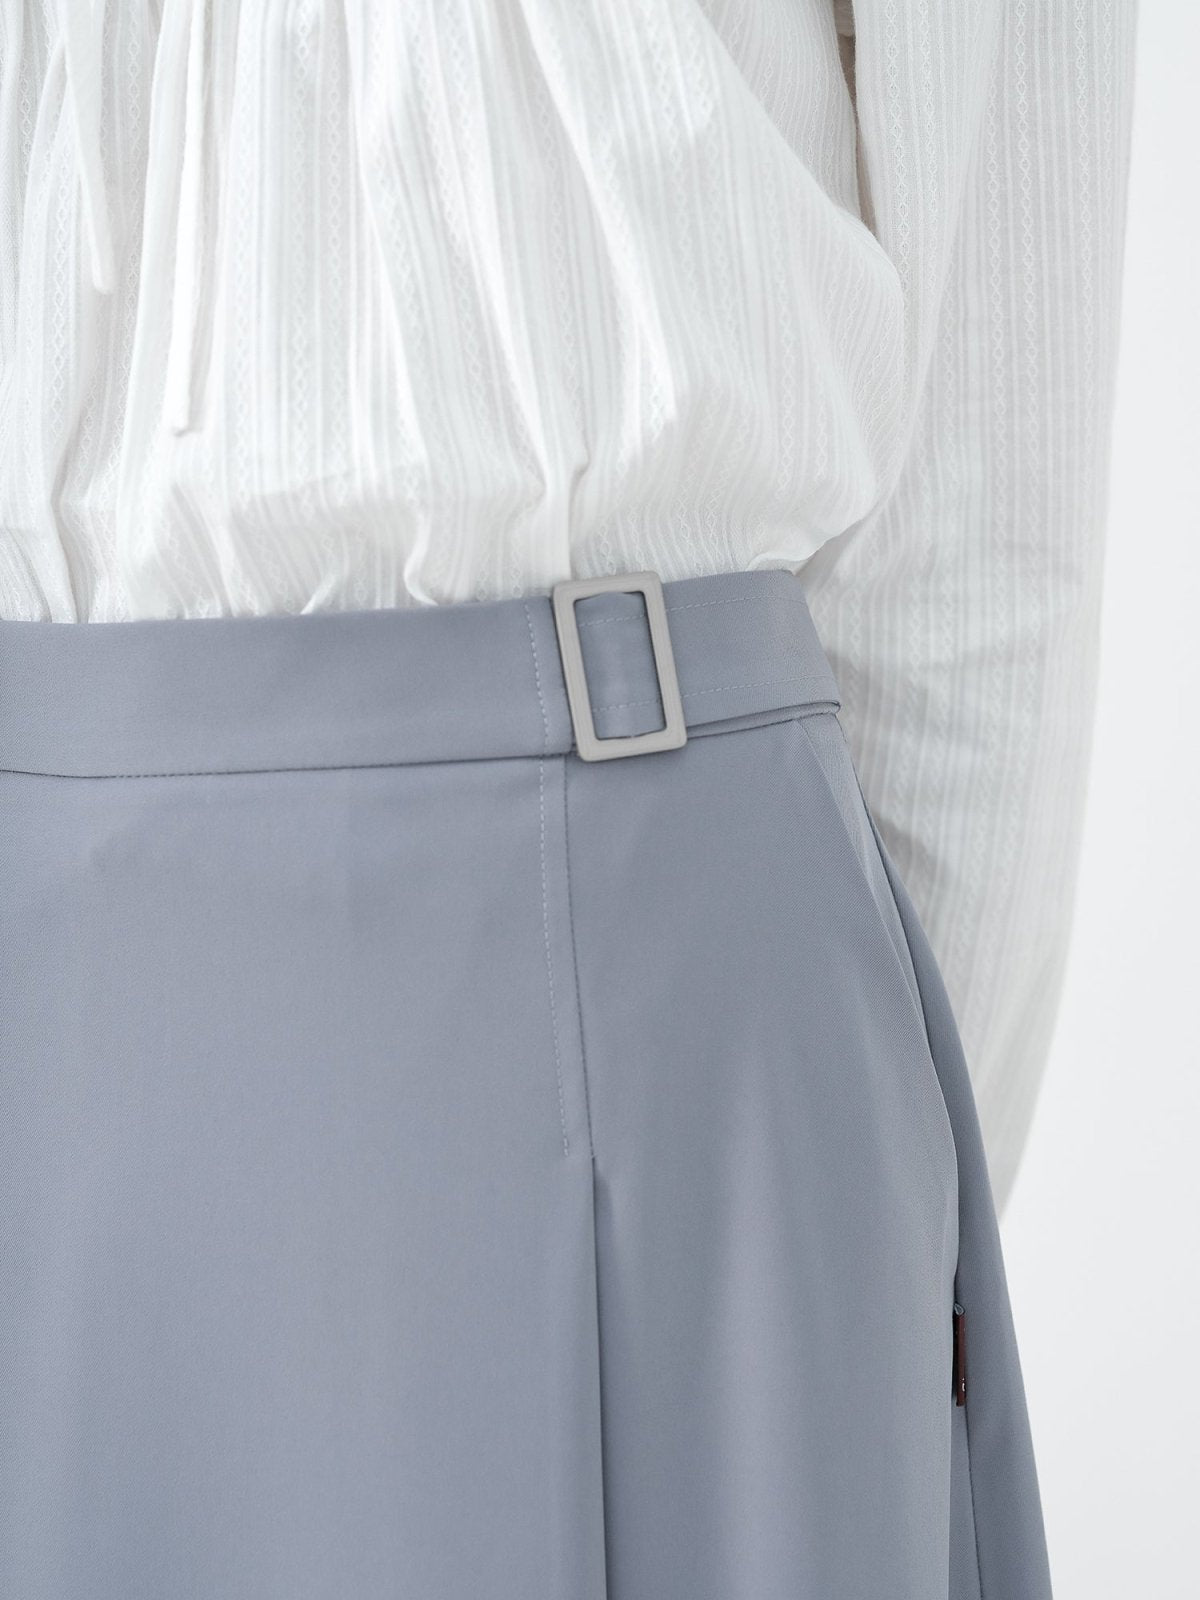 Marina Buckled A-line Midi Skirt - DAG-DD0833-23StoneBlueS - Stone Blue - S - D'ZAGE Designs